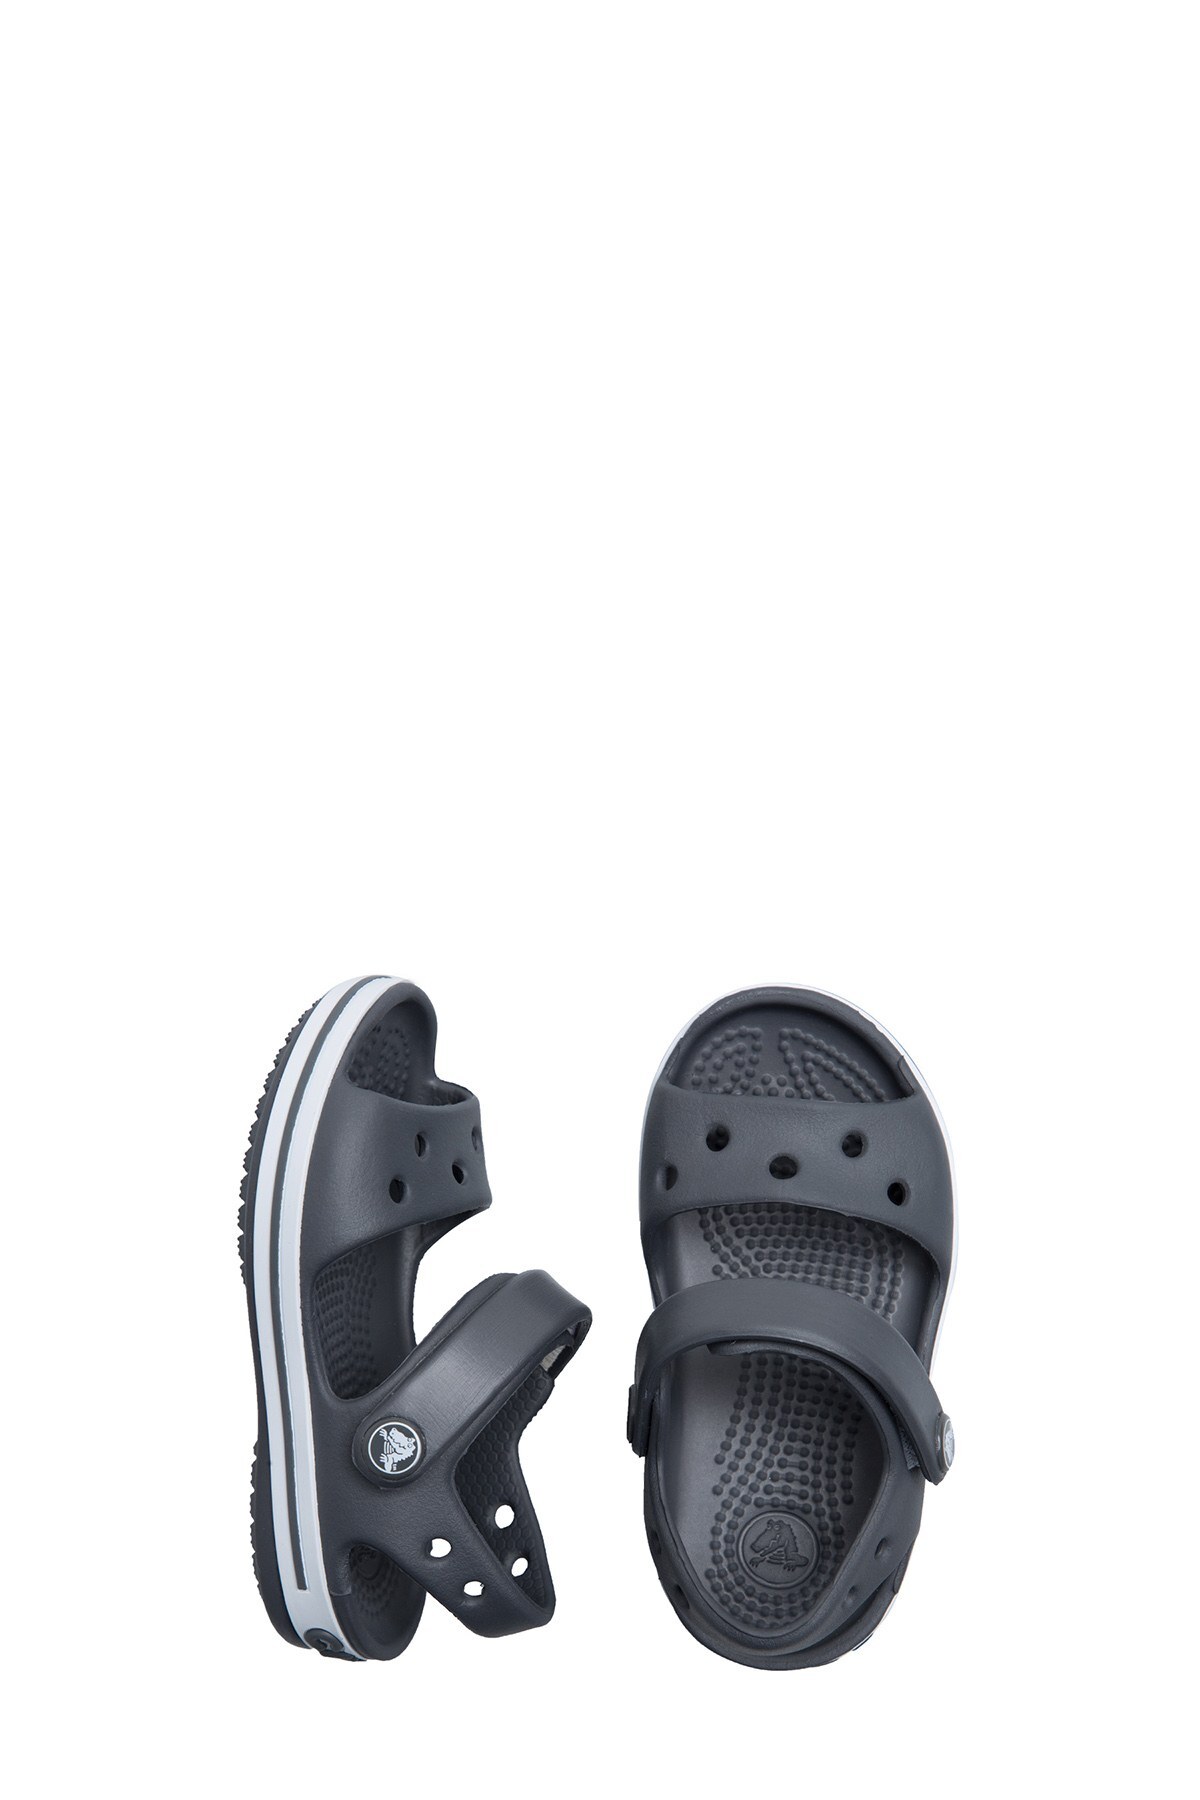 Crocs Crocband Unisex Sandalet 12856-014 FÜME